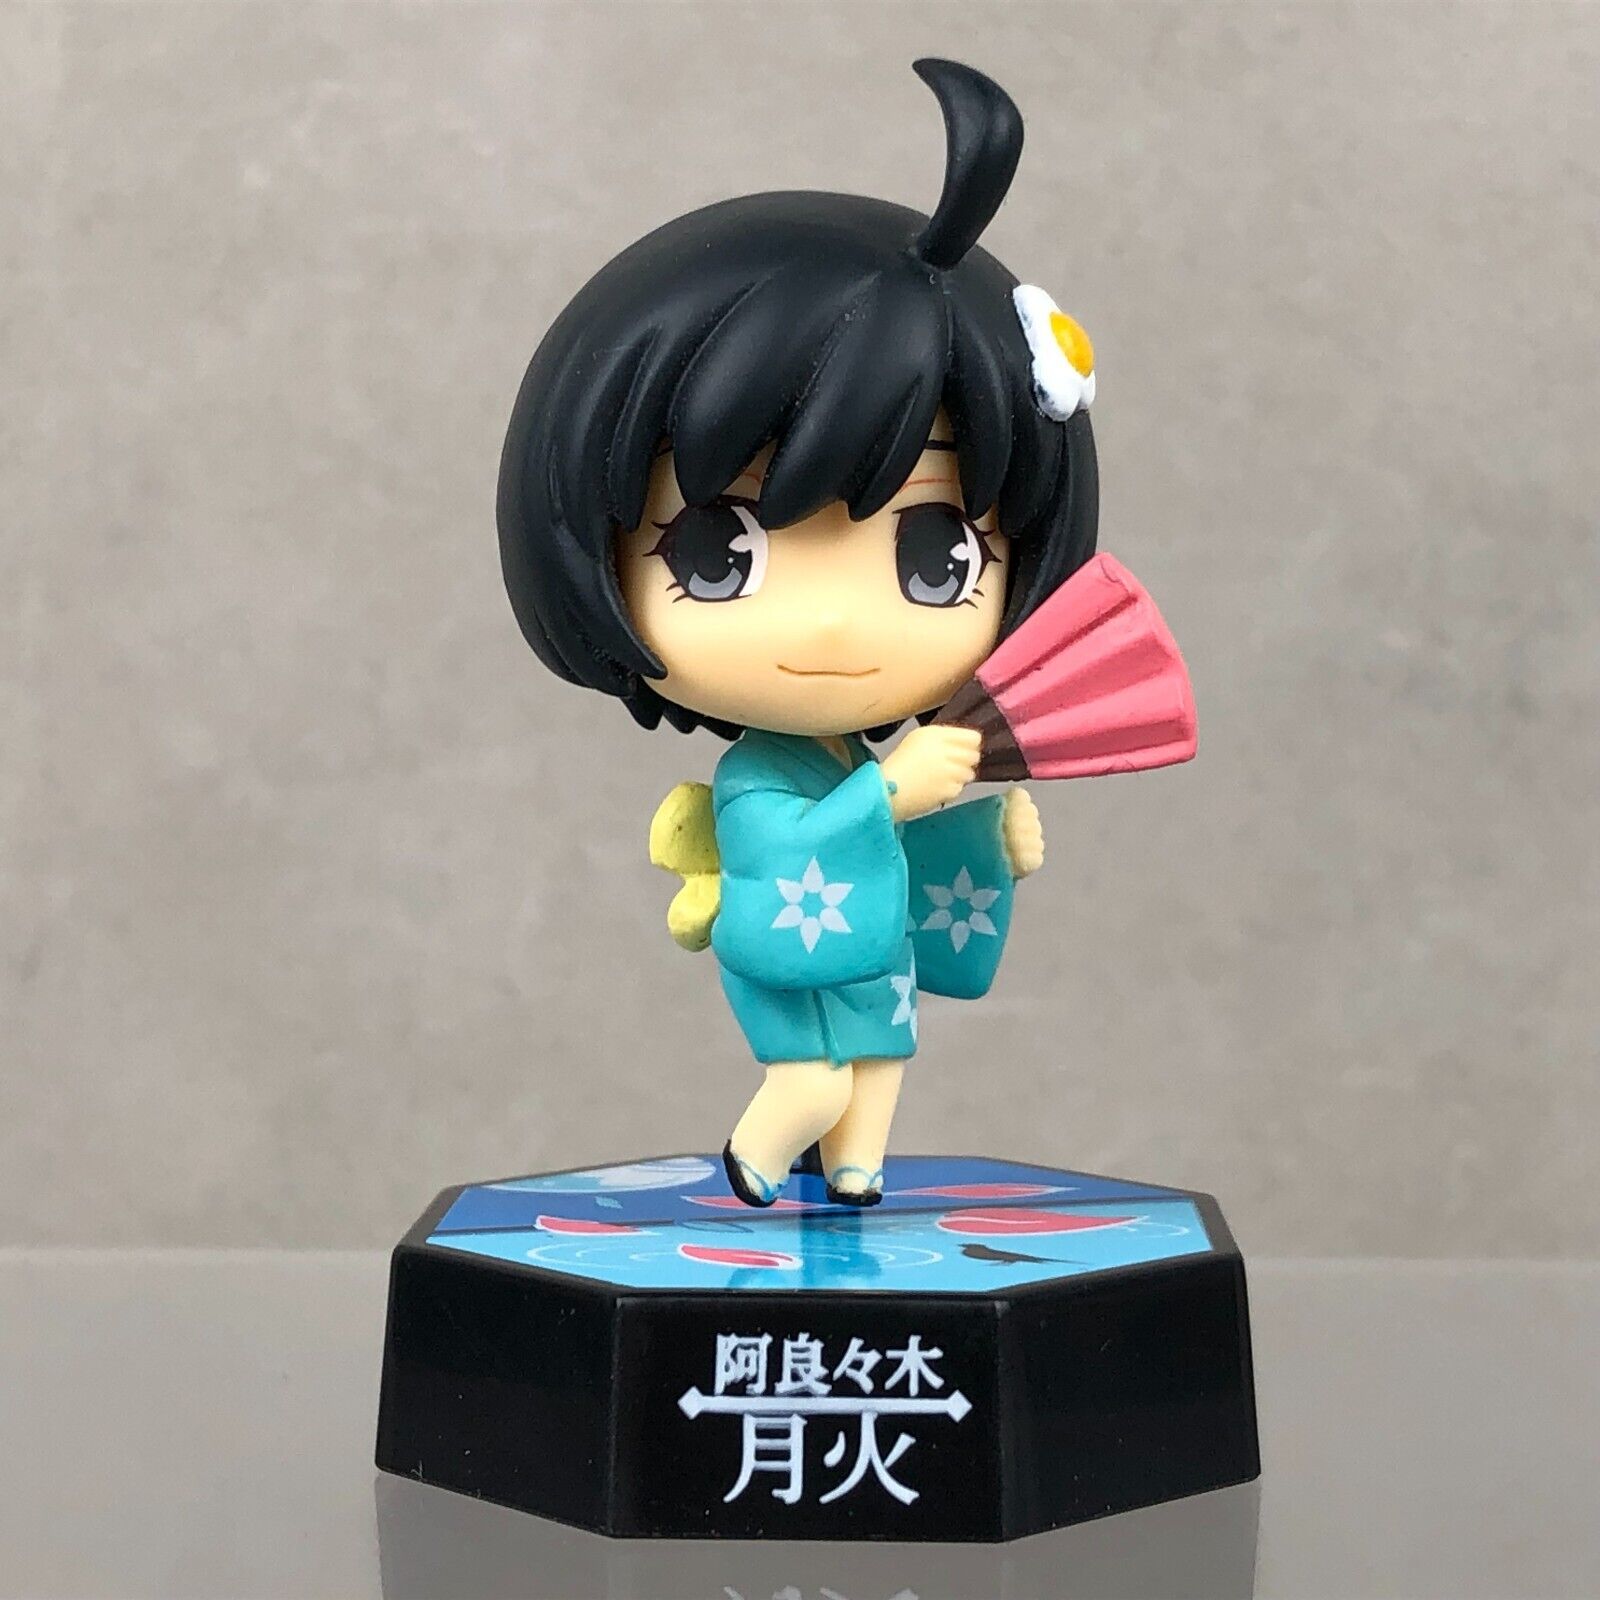 Bandai Nisemonogatari Araragi Tsukihi Collectage Anime Figure Japan Import